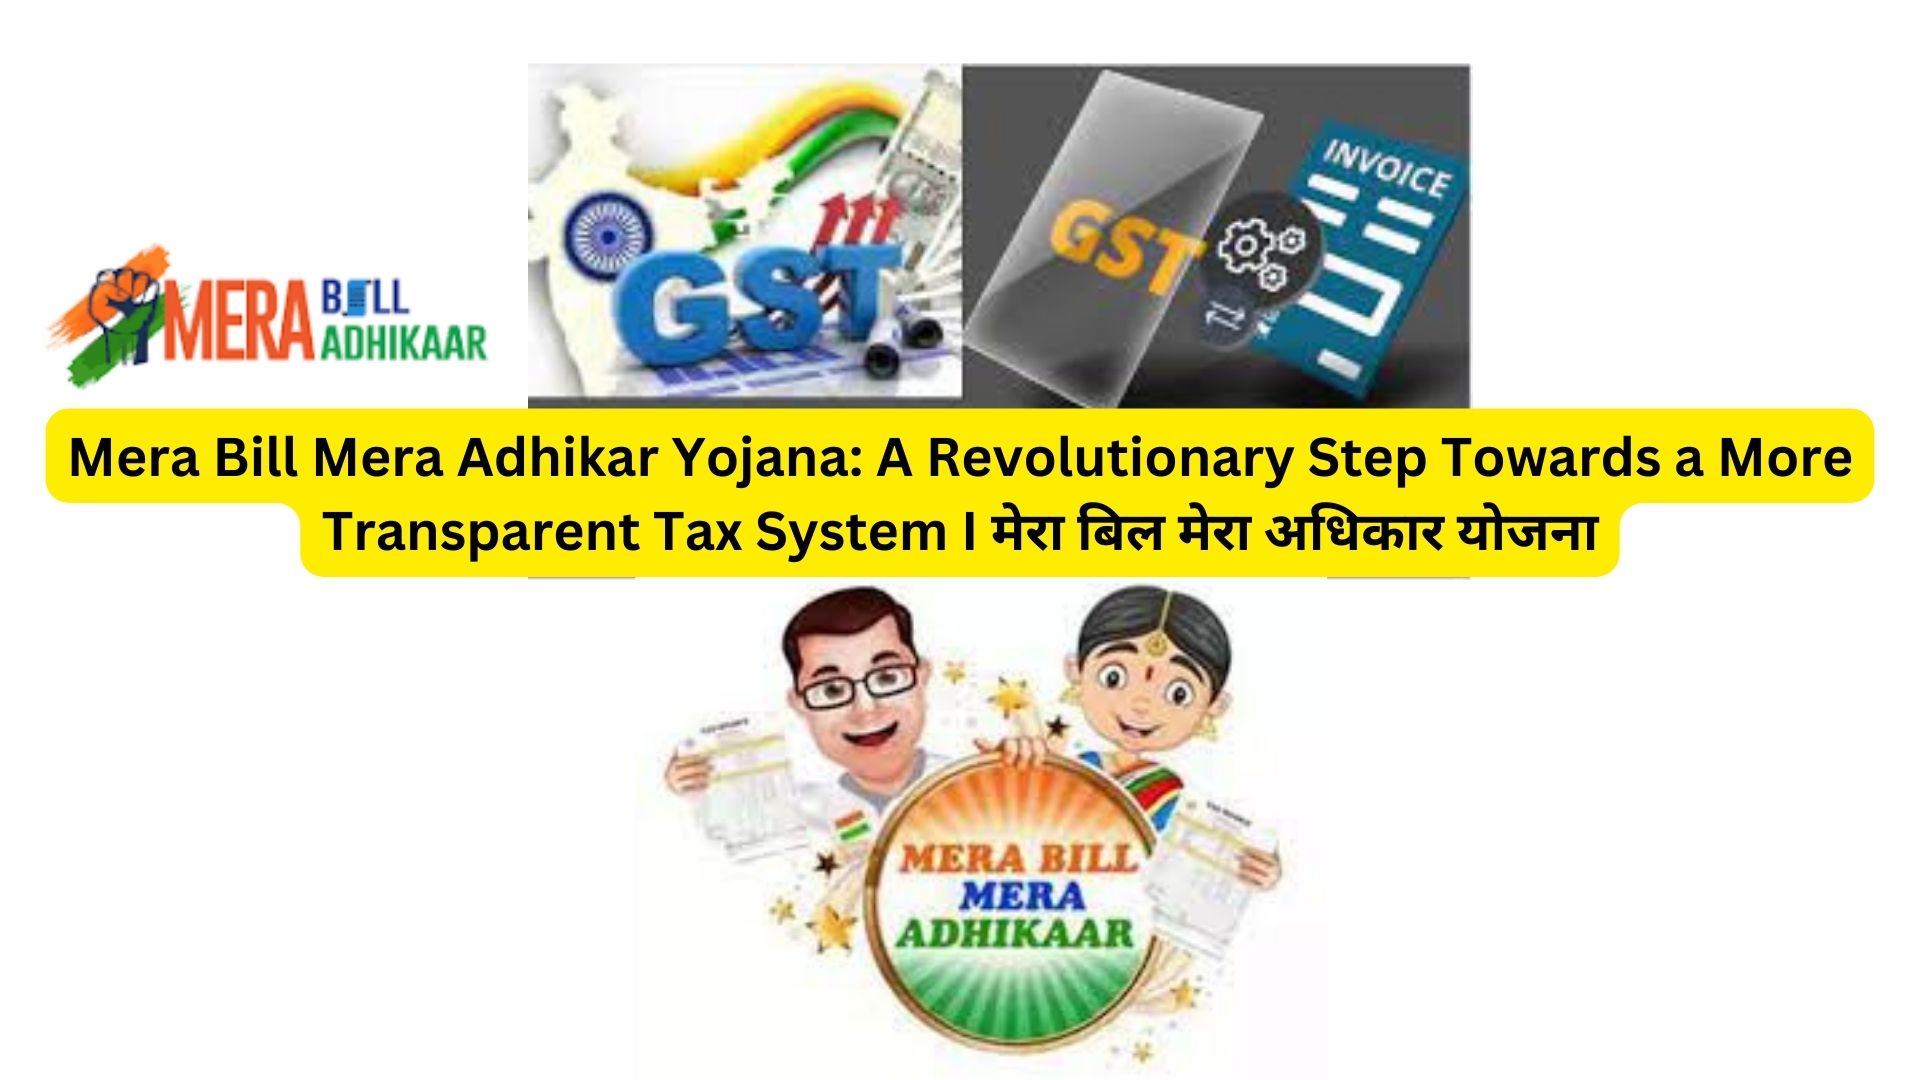 Mera Bill Mera Adhikar Yojana: A Revolutionary Step Towards a More Transparent Tax System I मेरा बिल मेरा अधिकार योजना